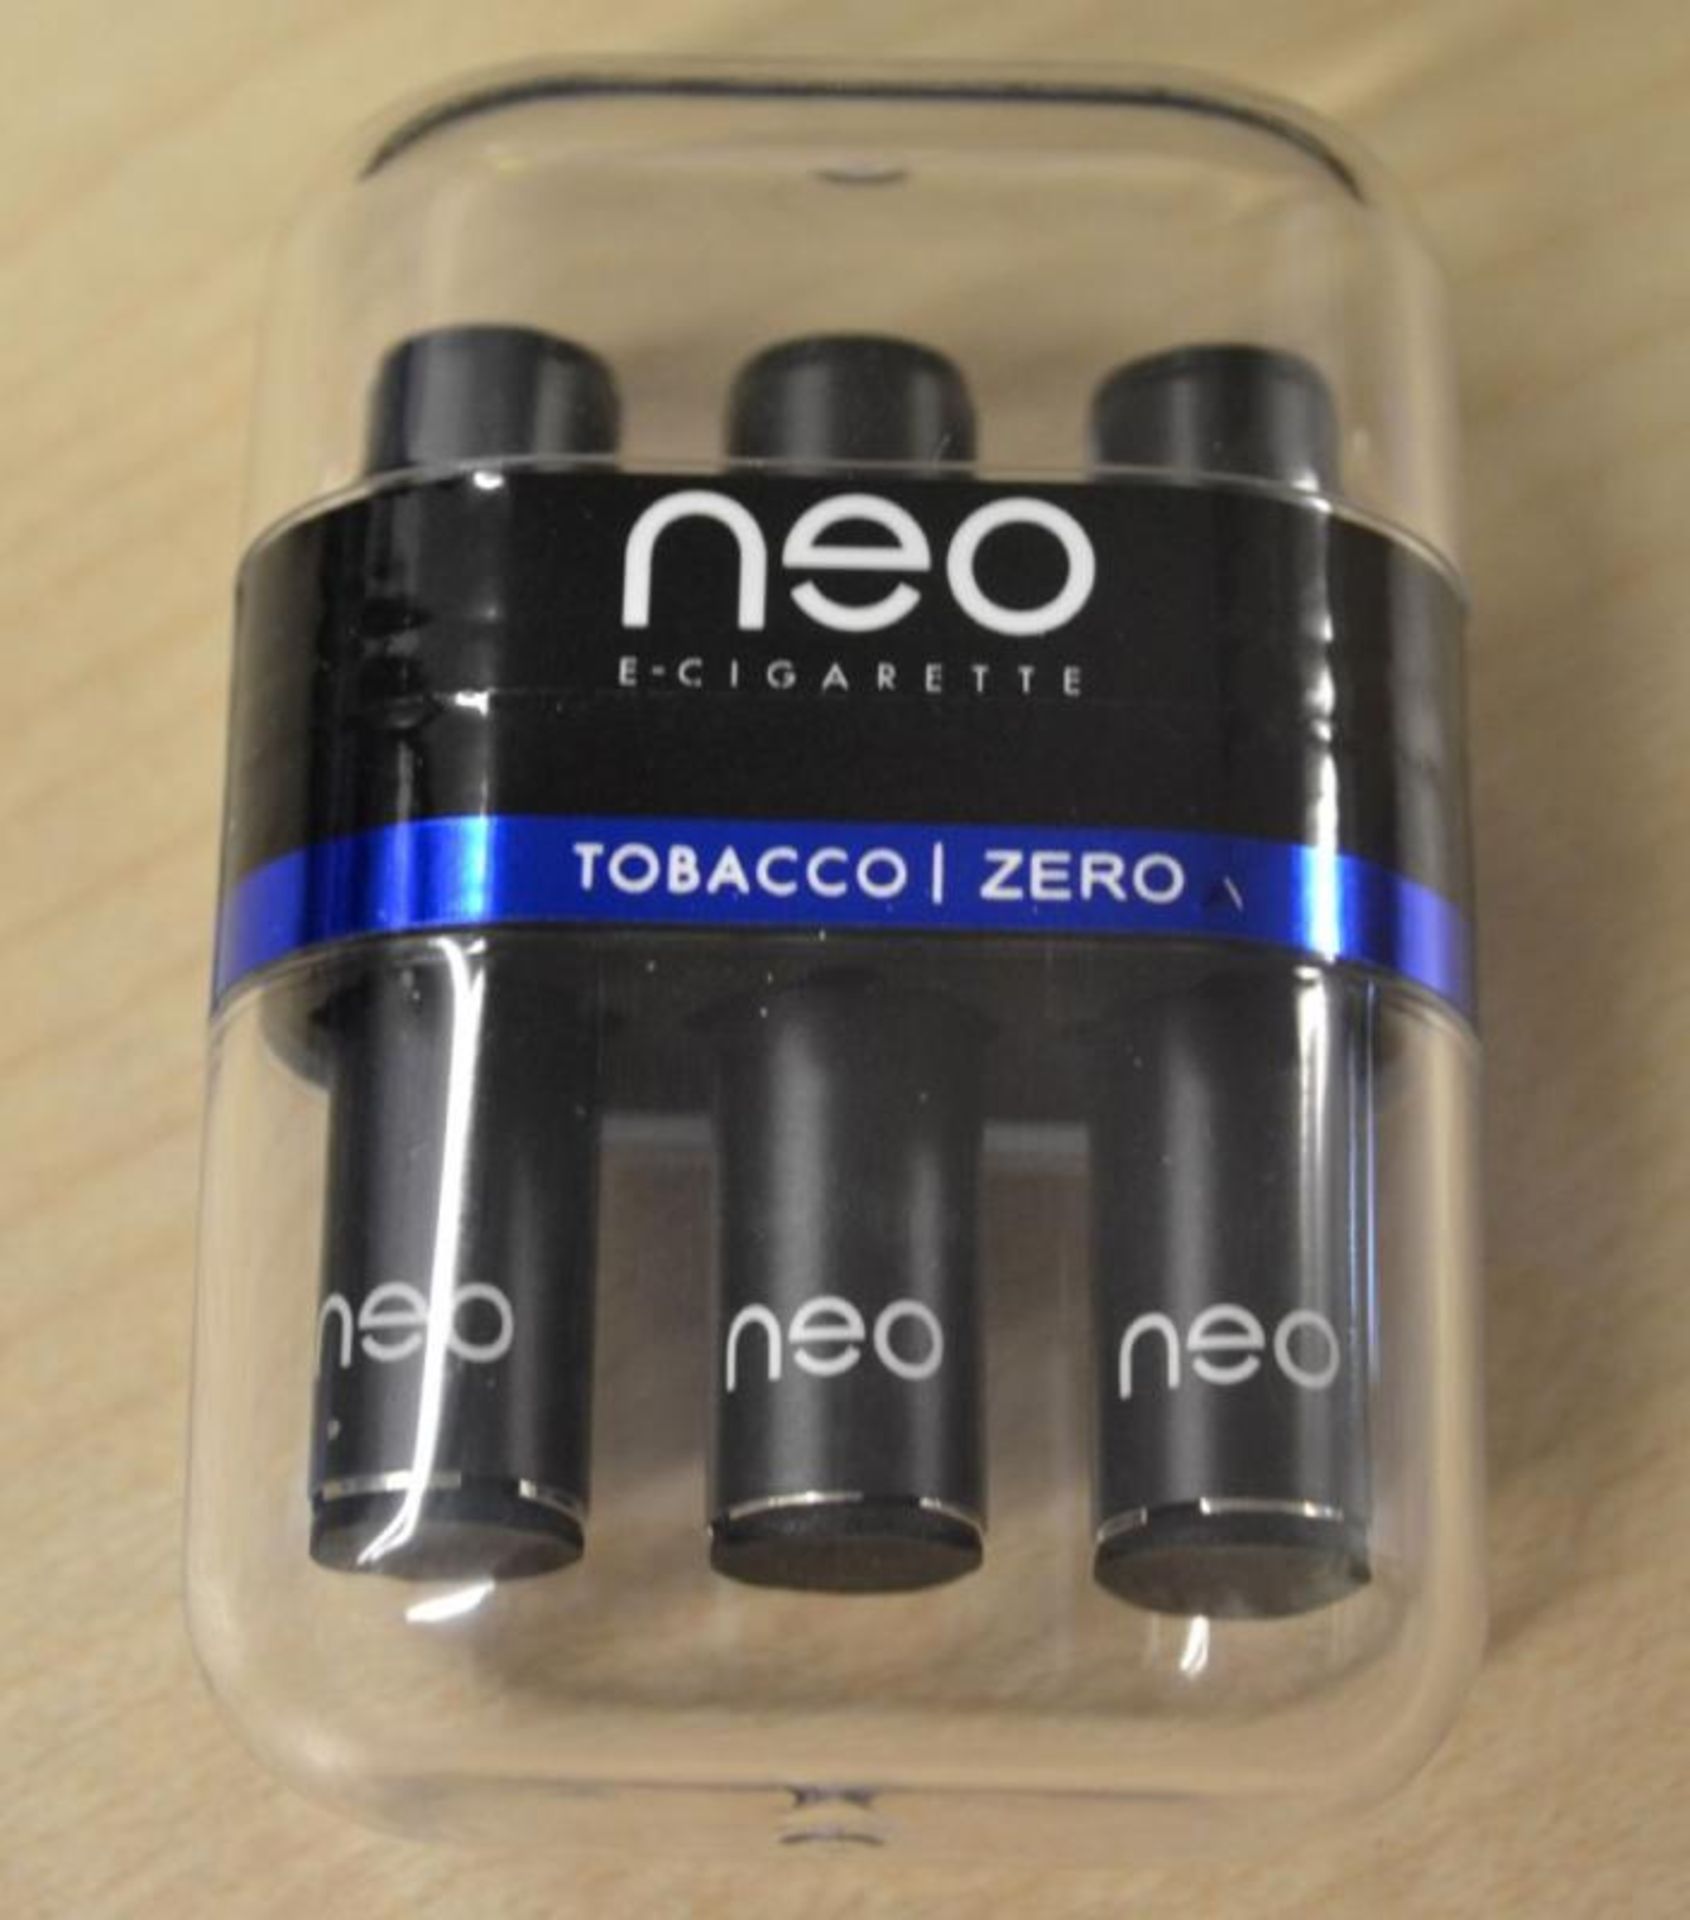 30 x Neo E-Cigarettes Neo Infinity Tobacco Zero Refill Packs - New & Sealed Stock - CL185 - Ref: - Image 8 of 9